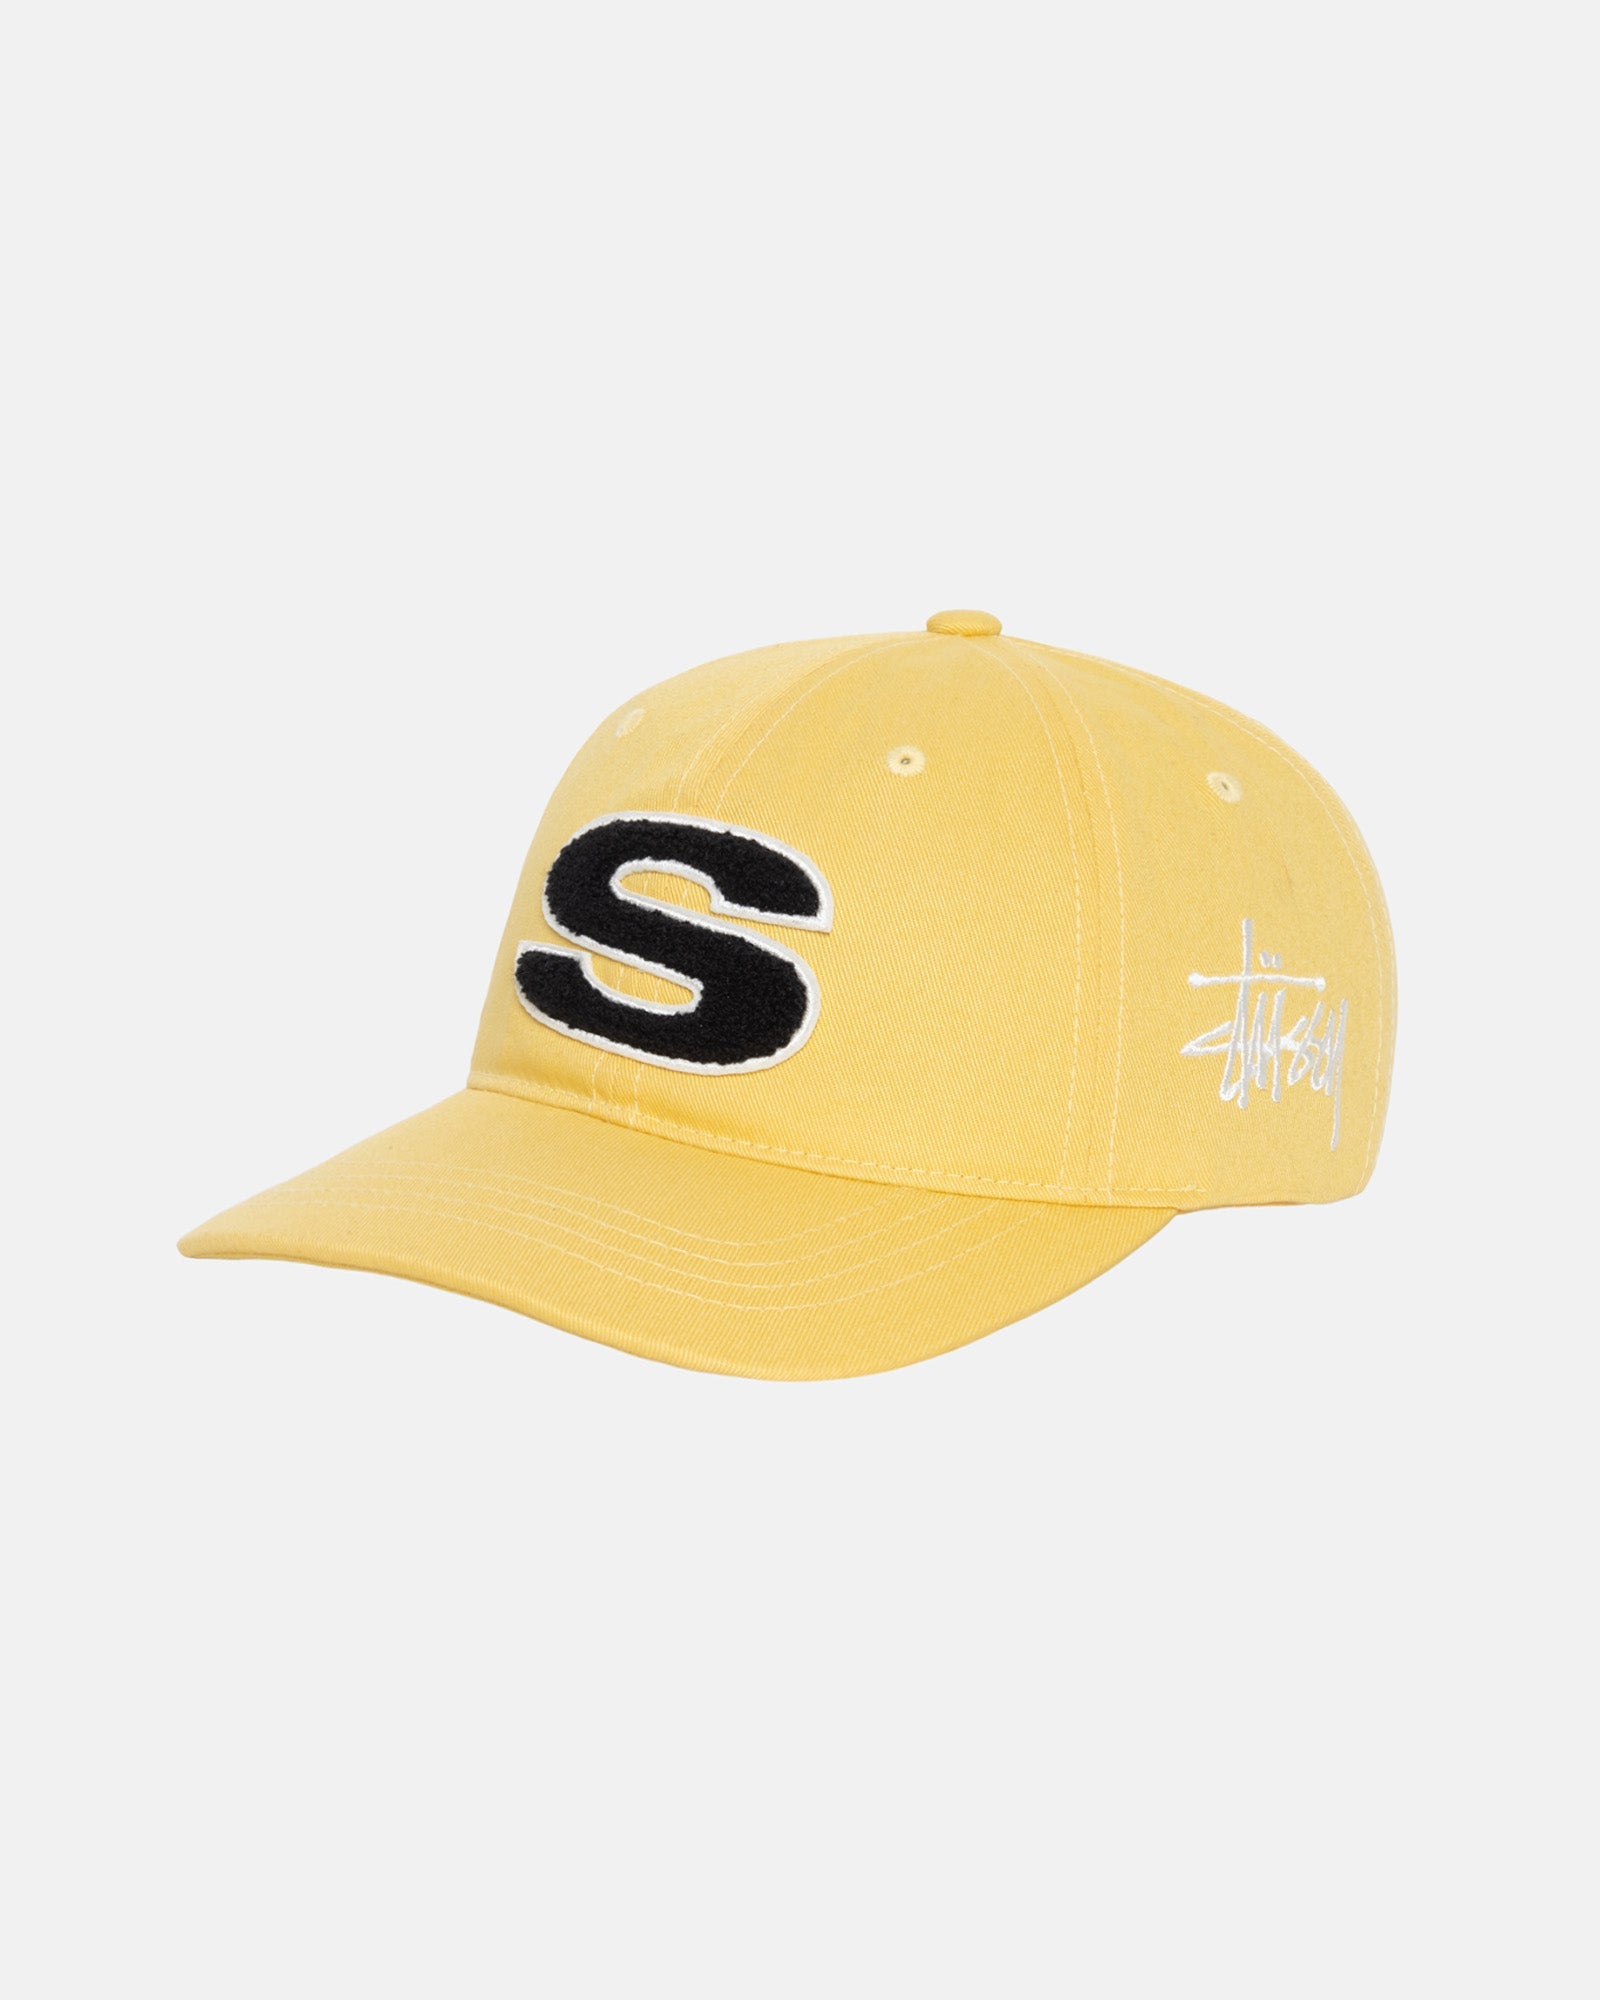 Stussy CHENILLE S LOW PRO CAP キャップ 黄色 - キャップ